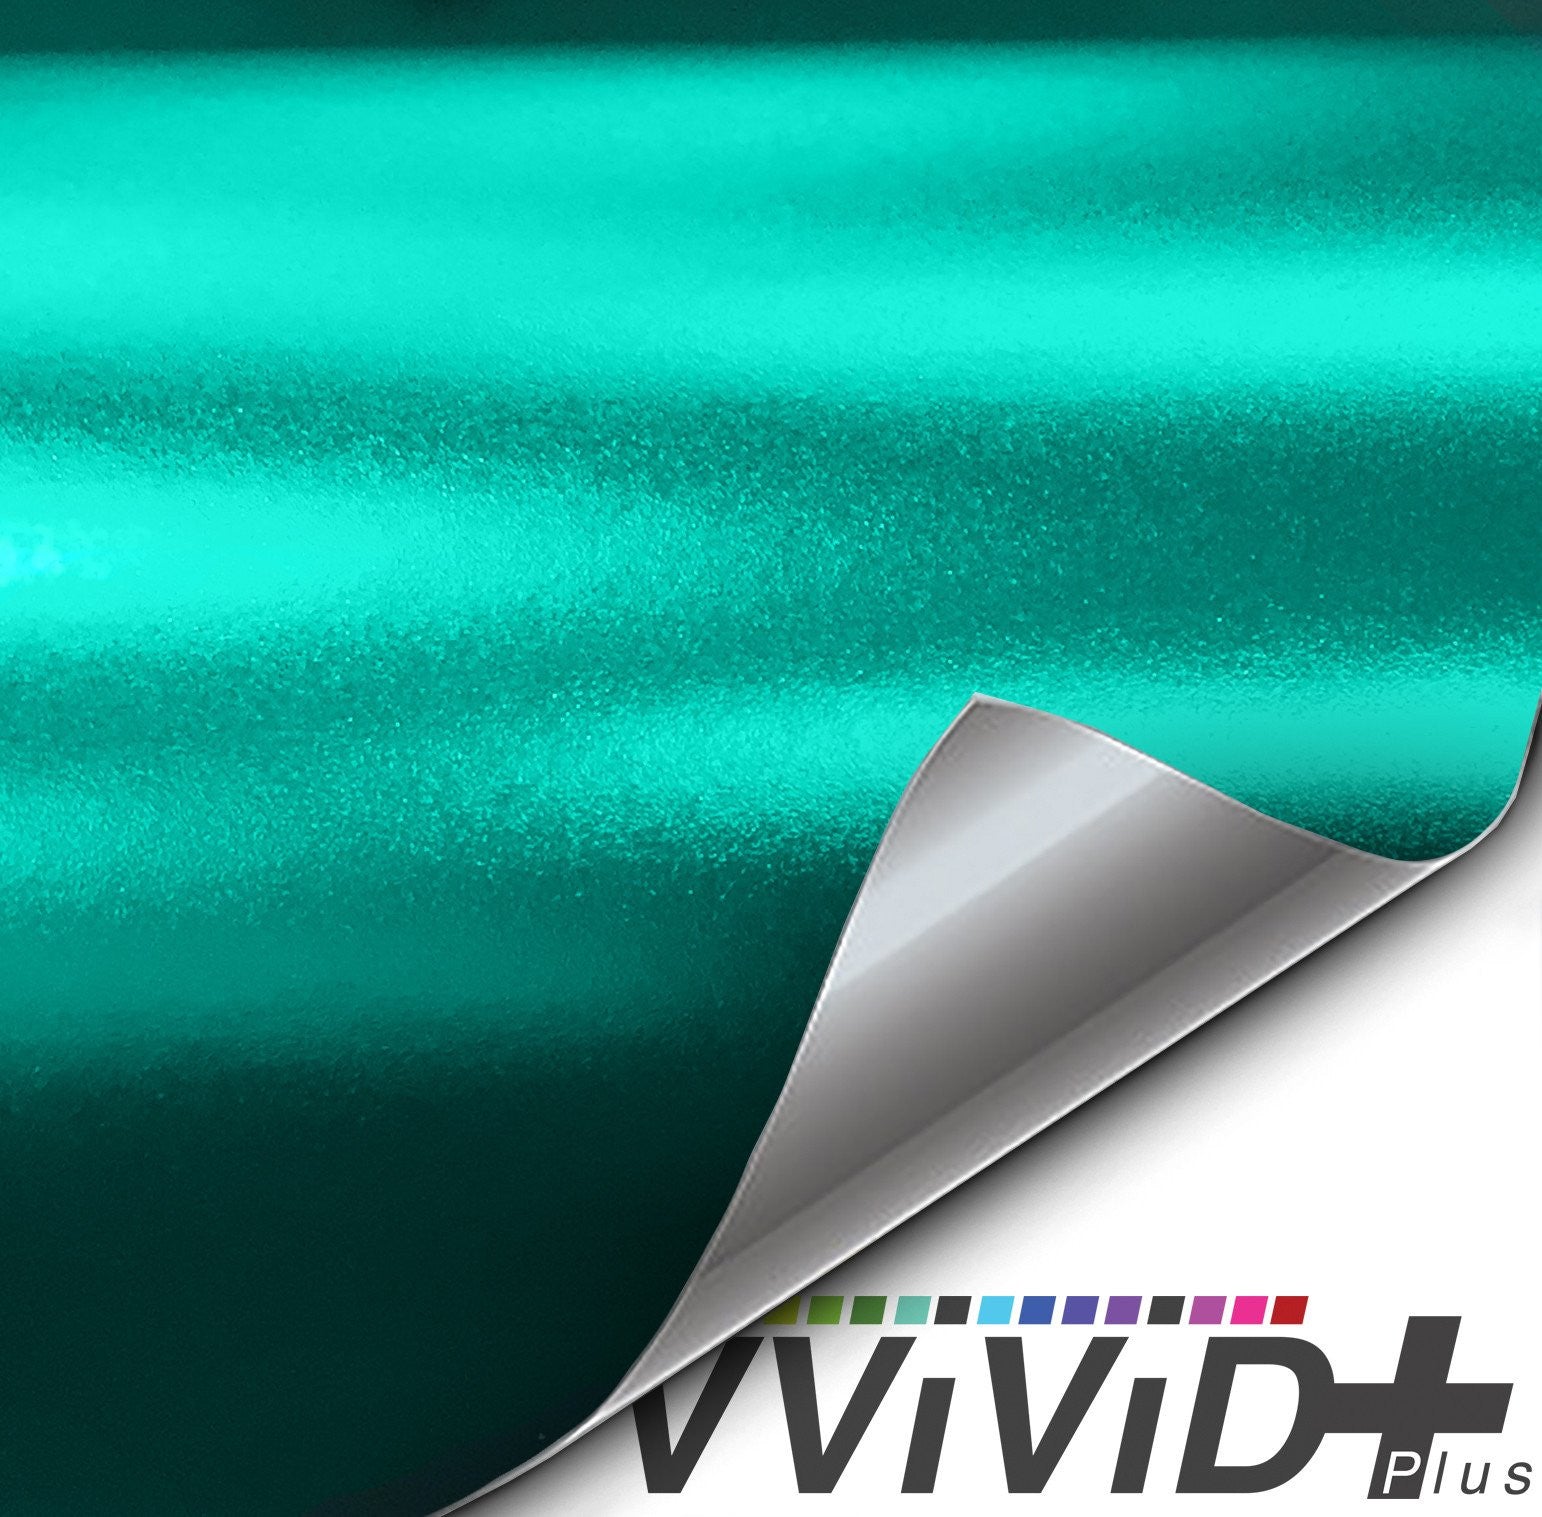 2017 VVIVID+ Conform Satin Chrome Miami Teal Blue Vinyl Wrap | Vvivid Canada